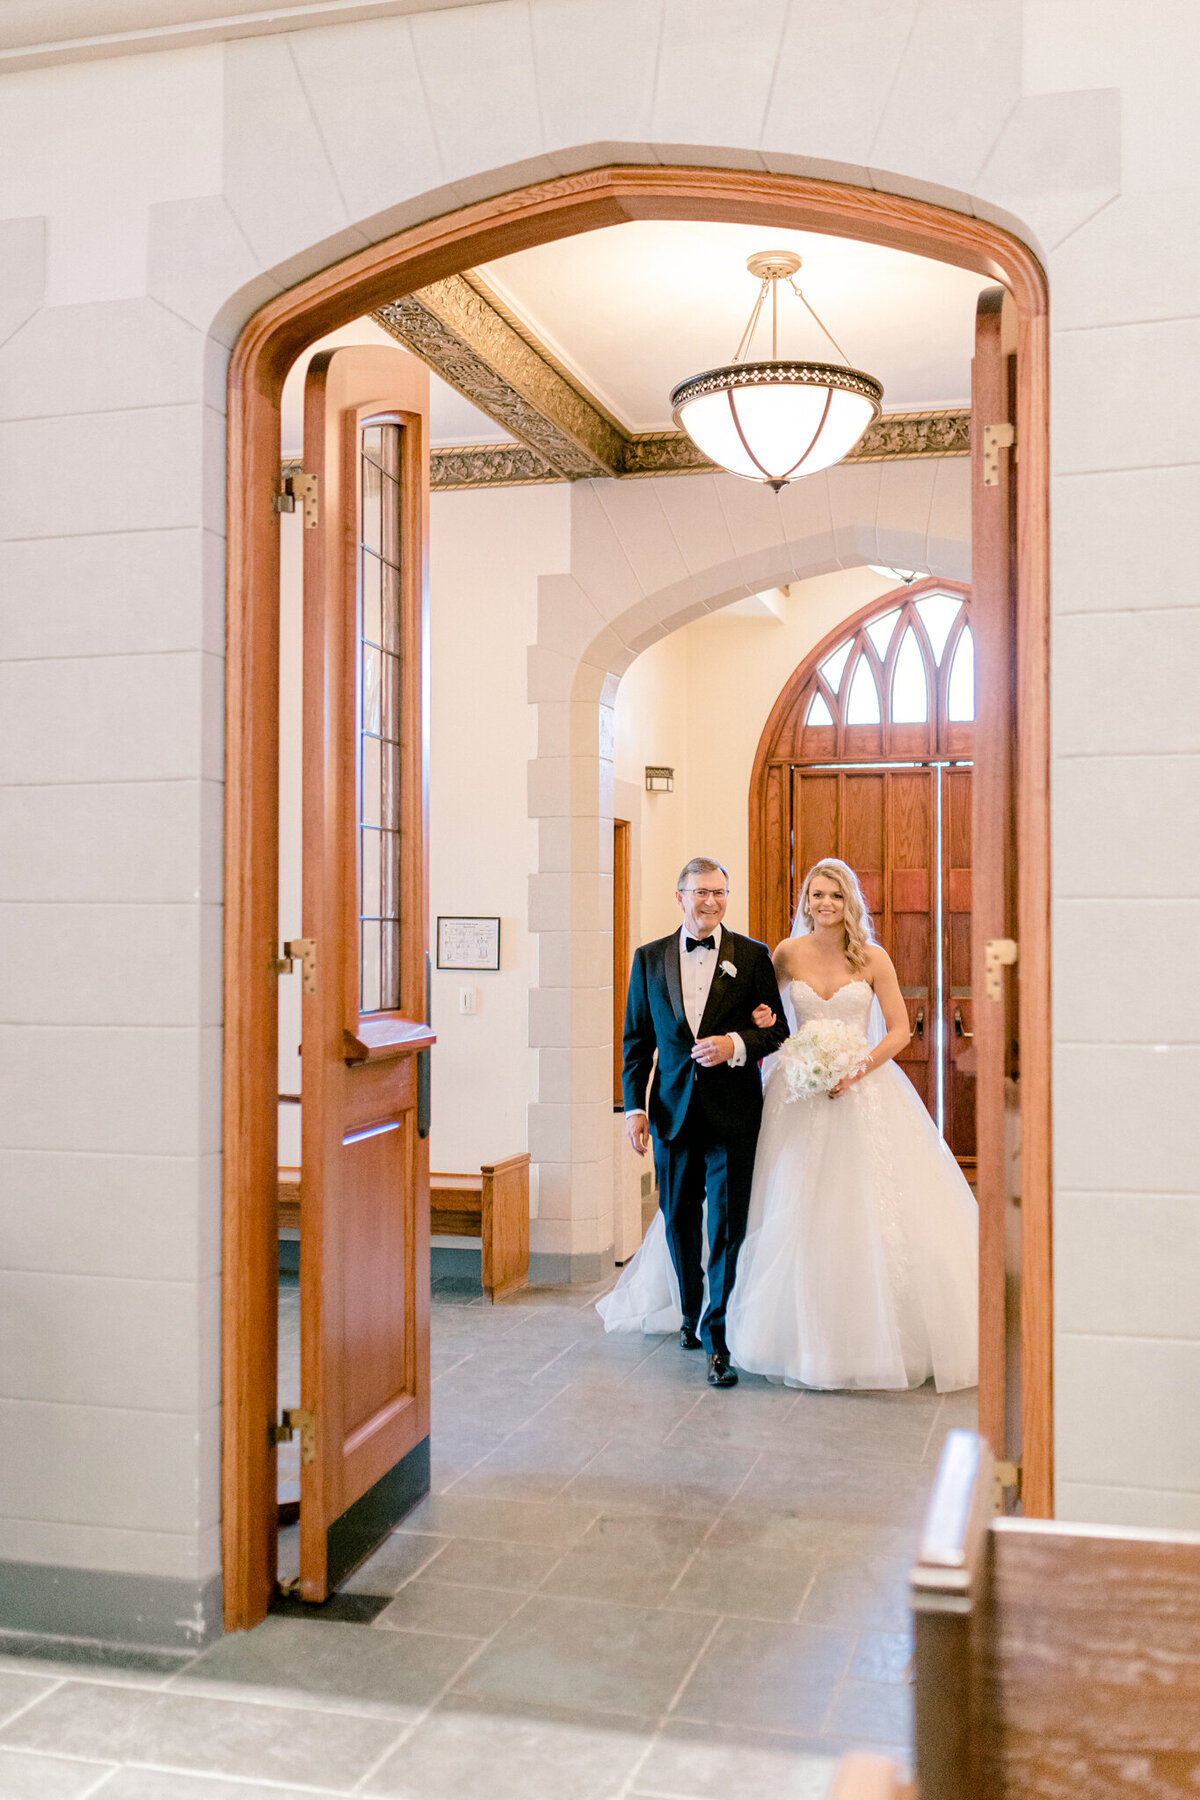 Shelby & Thomas's Wedding at HPUMC The Room on Main | Dallas Wedding Photographer | Sami Kathryn Photography-105